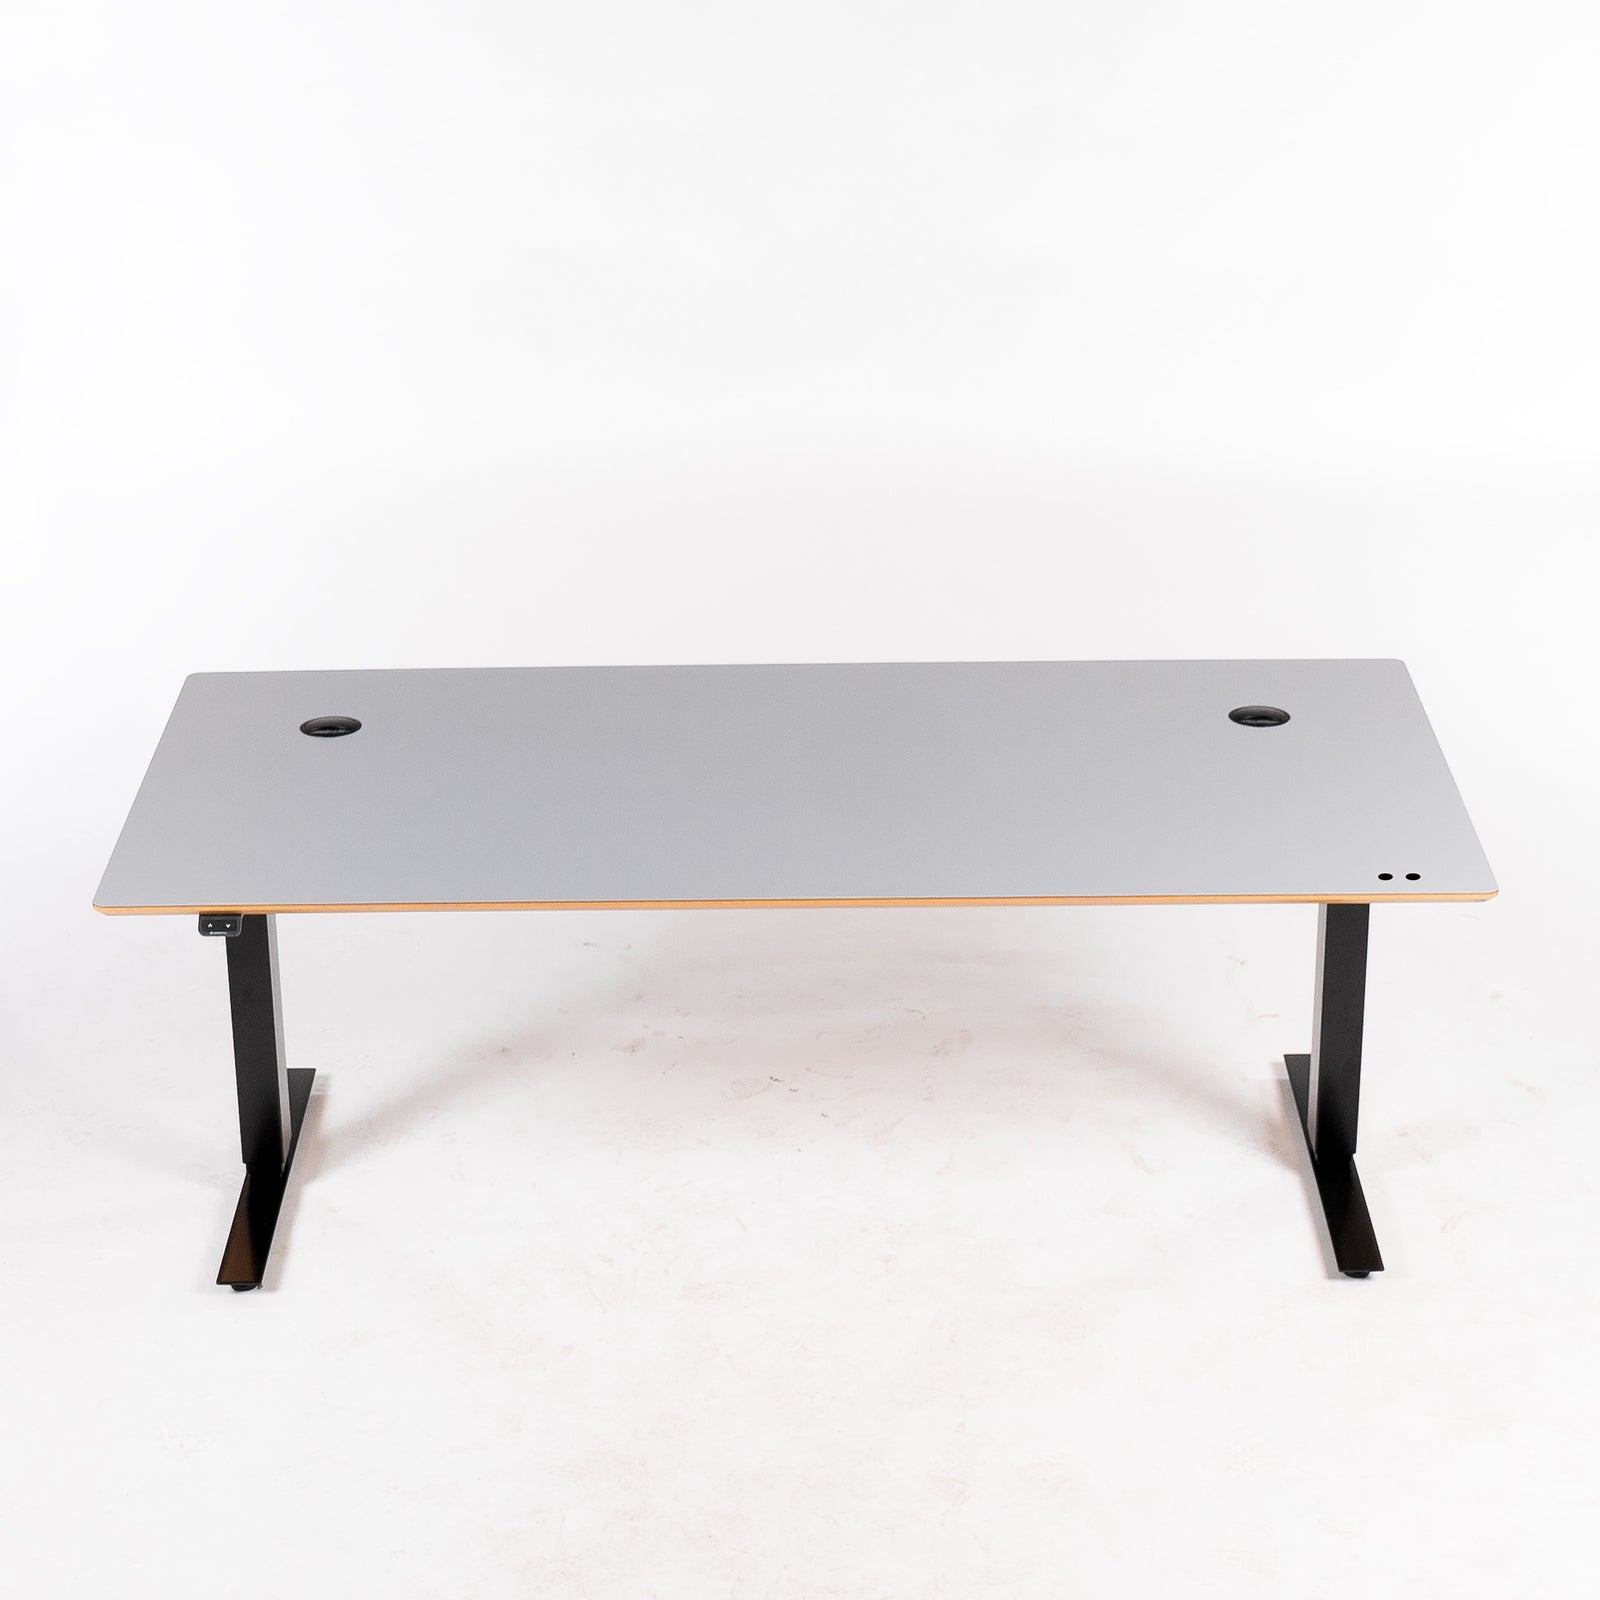 Hæve sænkebord 180 x 90 - grå laminat